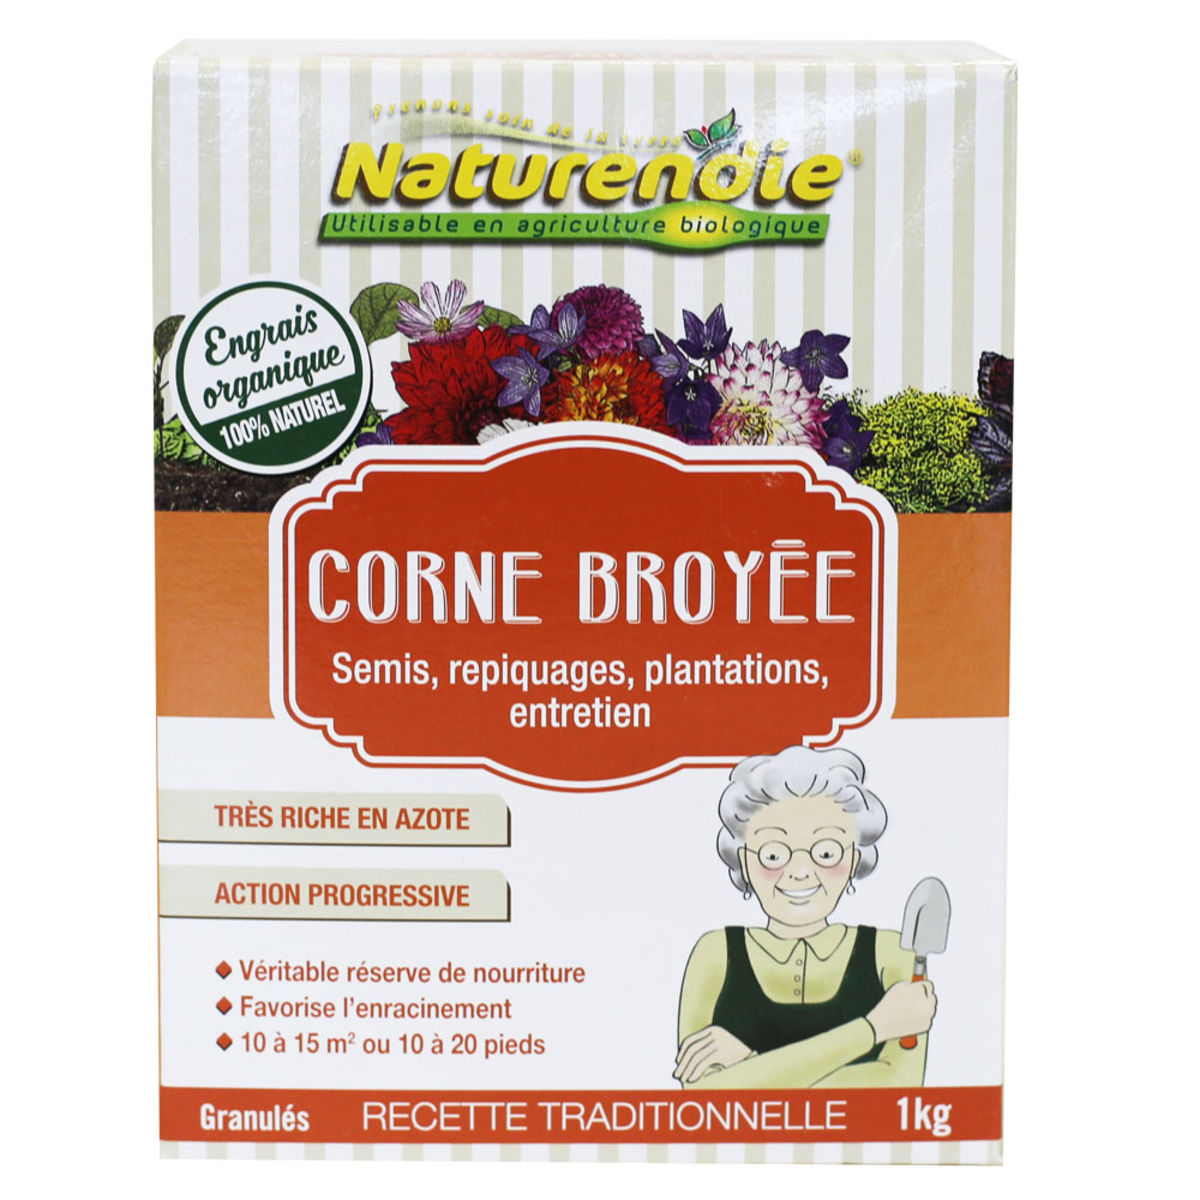 Corne broyée (500g, 1Kg, 5Kg)